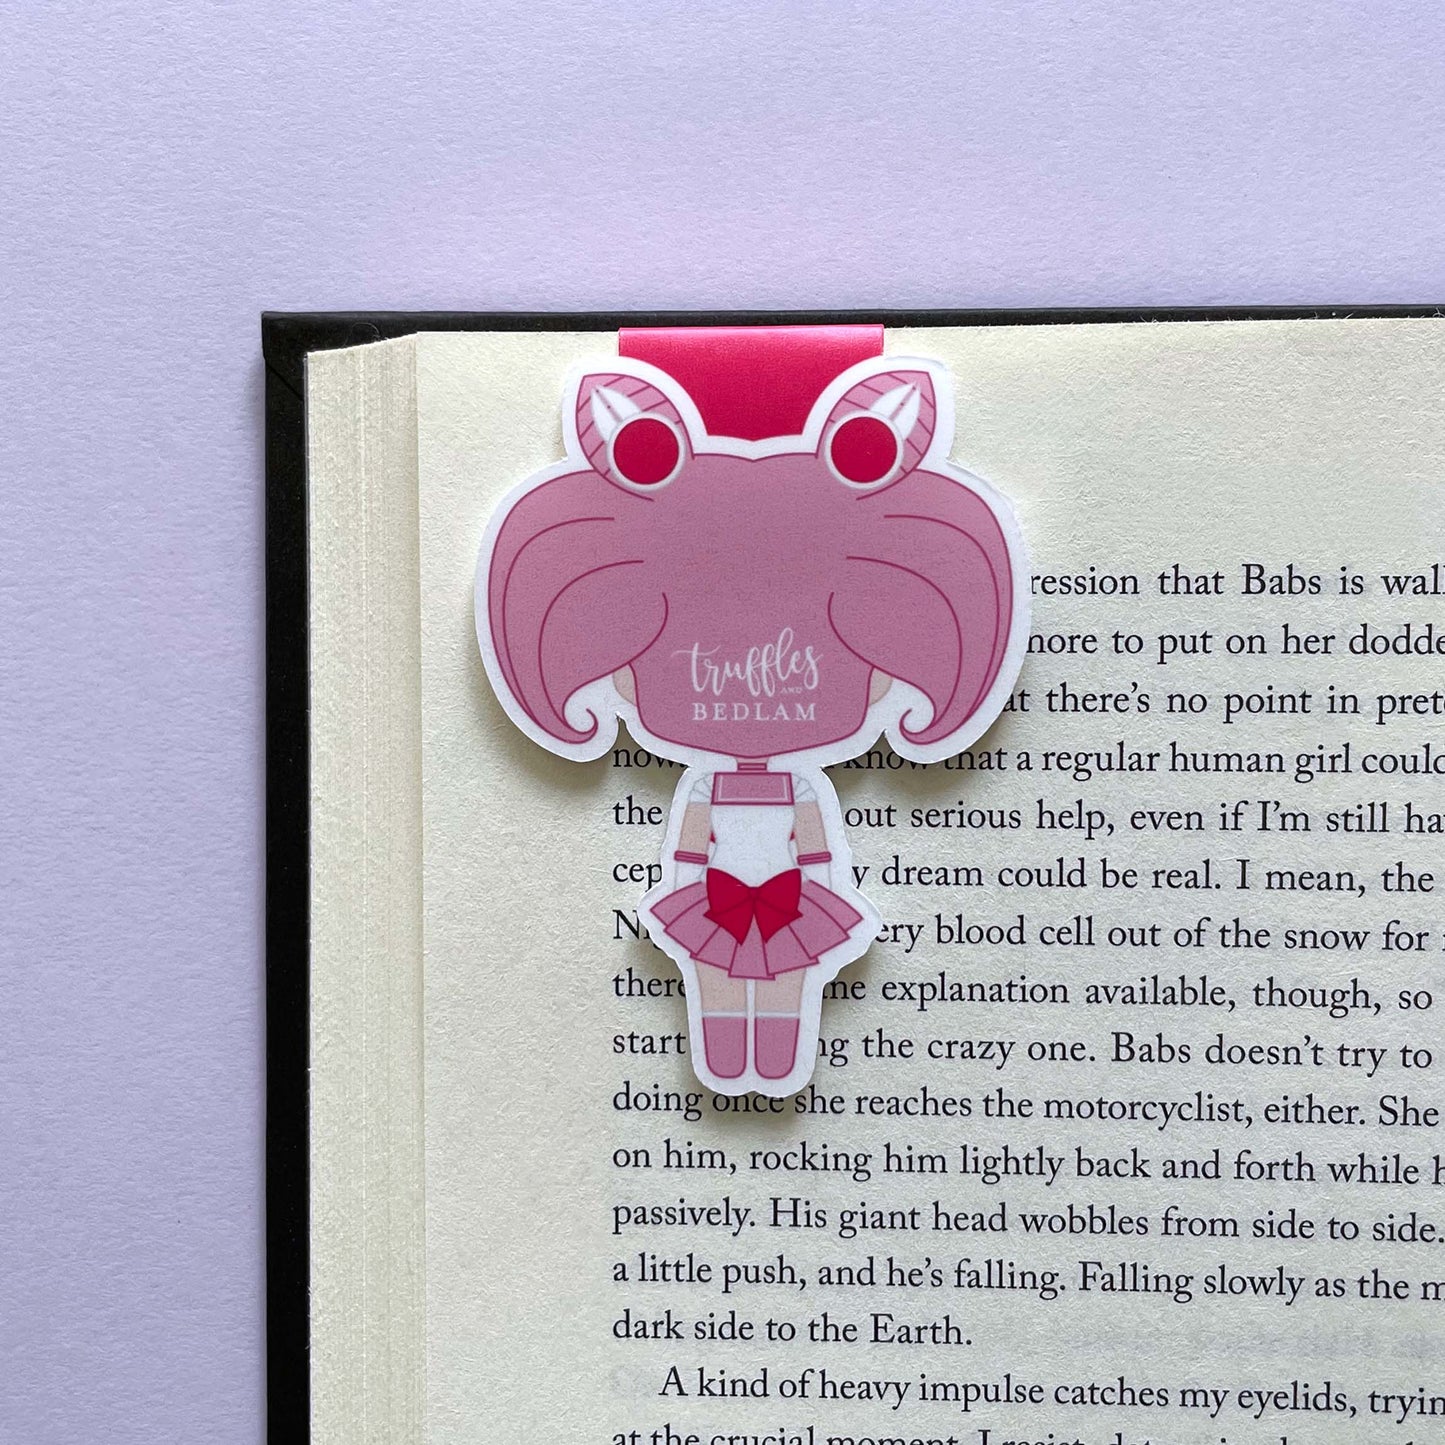 Celestial Sailor "Mini Princess" Magnetic Bookmark